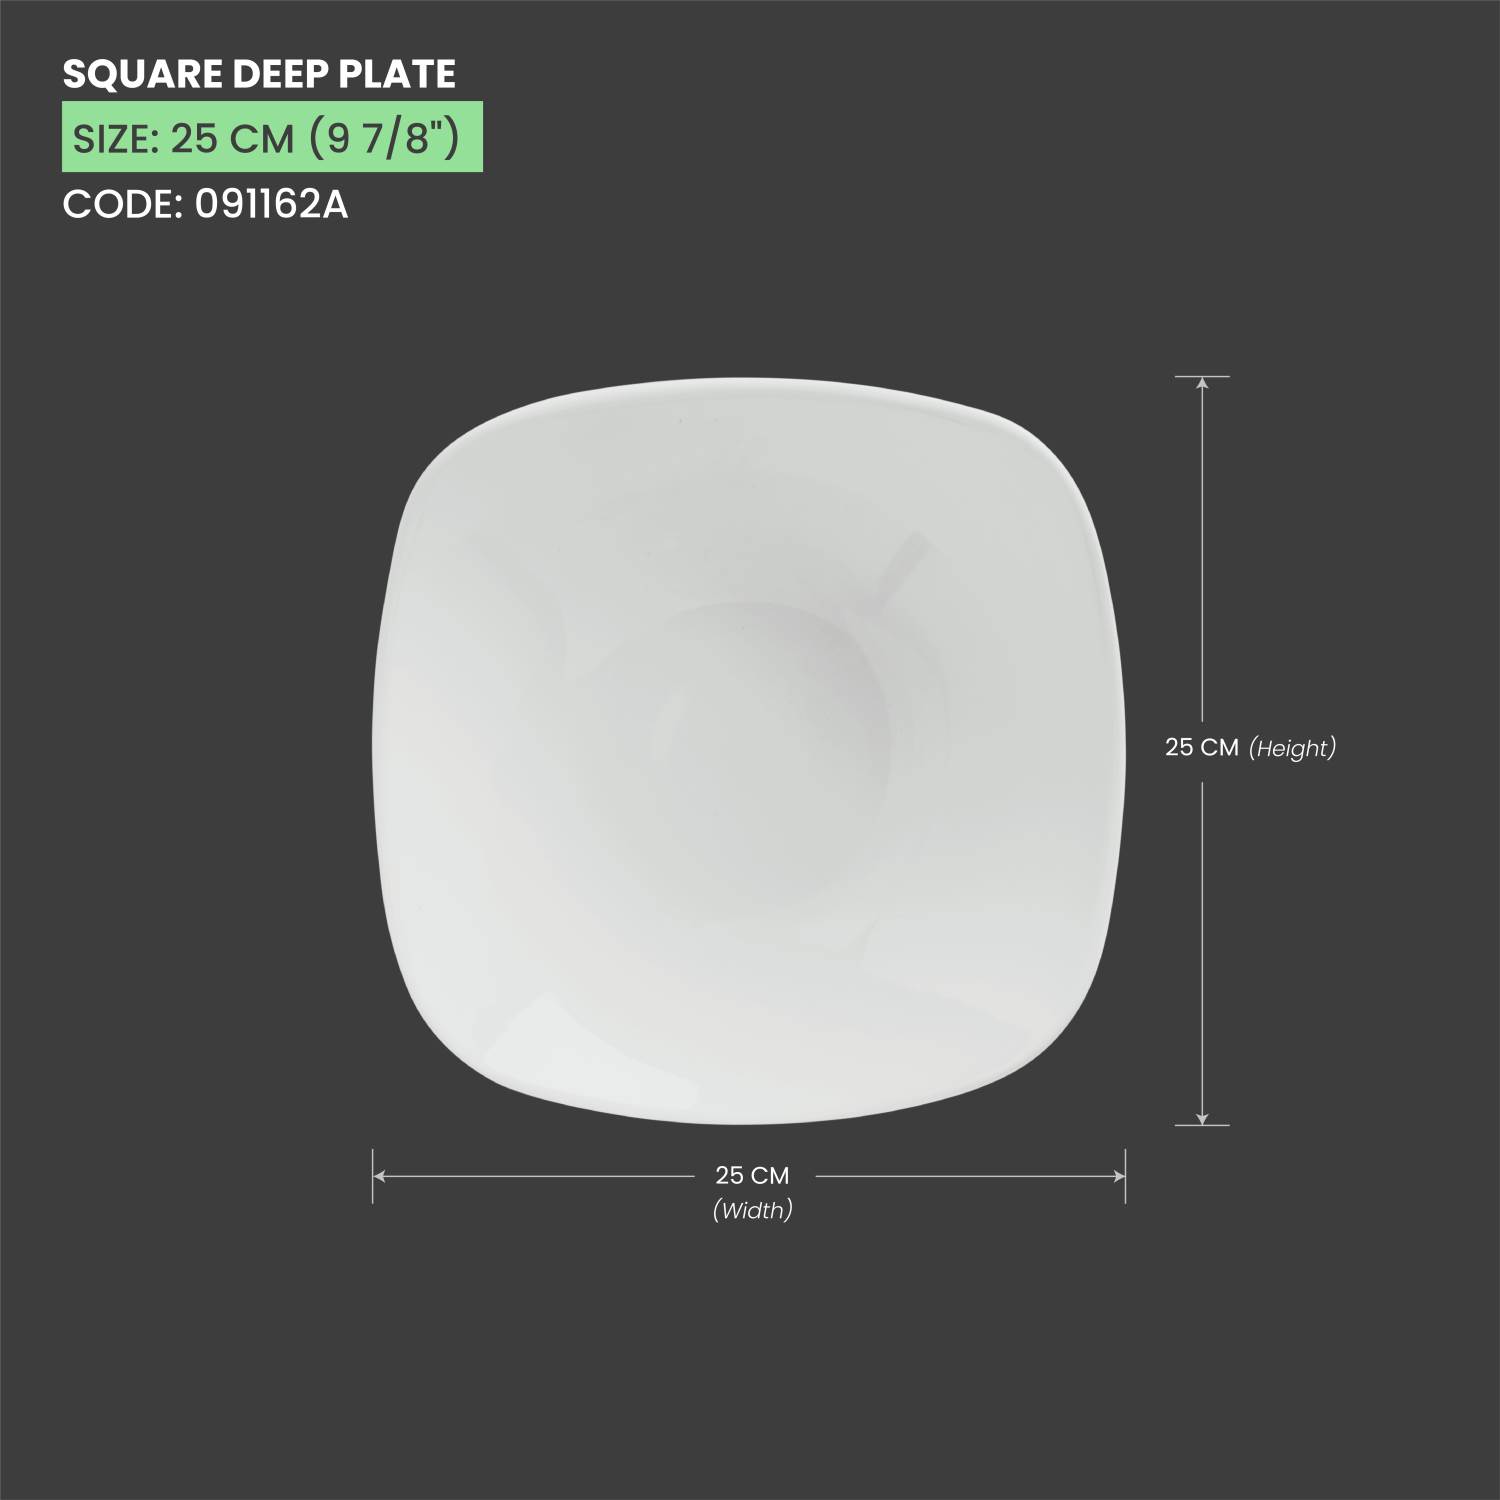 Baralee Simple Plus Square Deep Plate 25 Cm (9 7/8")